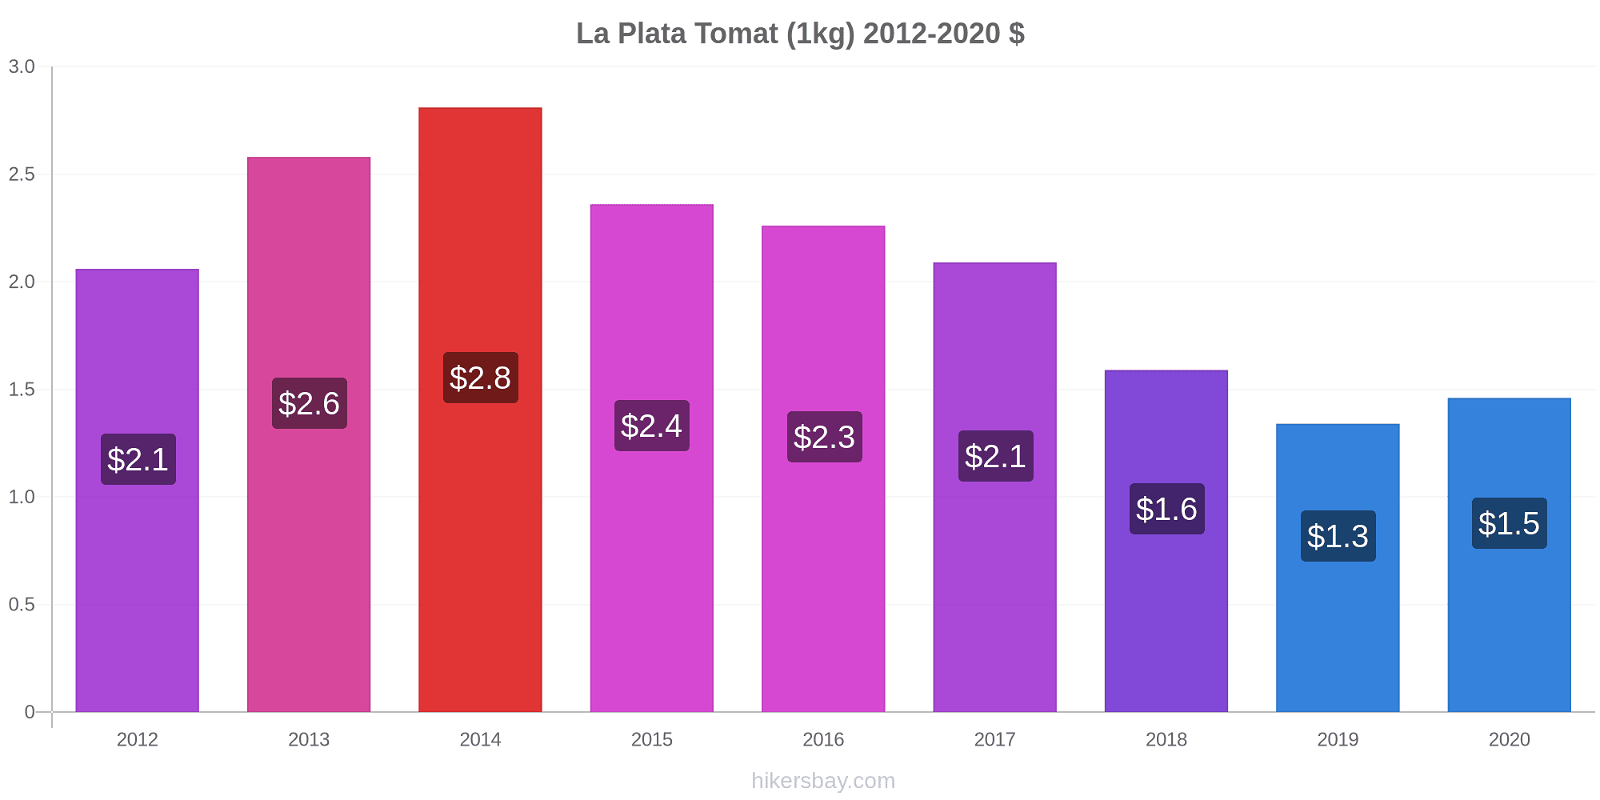 La Plata prisændringer Tomat (1kg) hikersbay.com